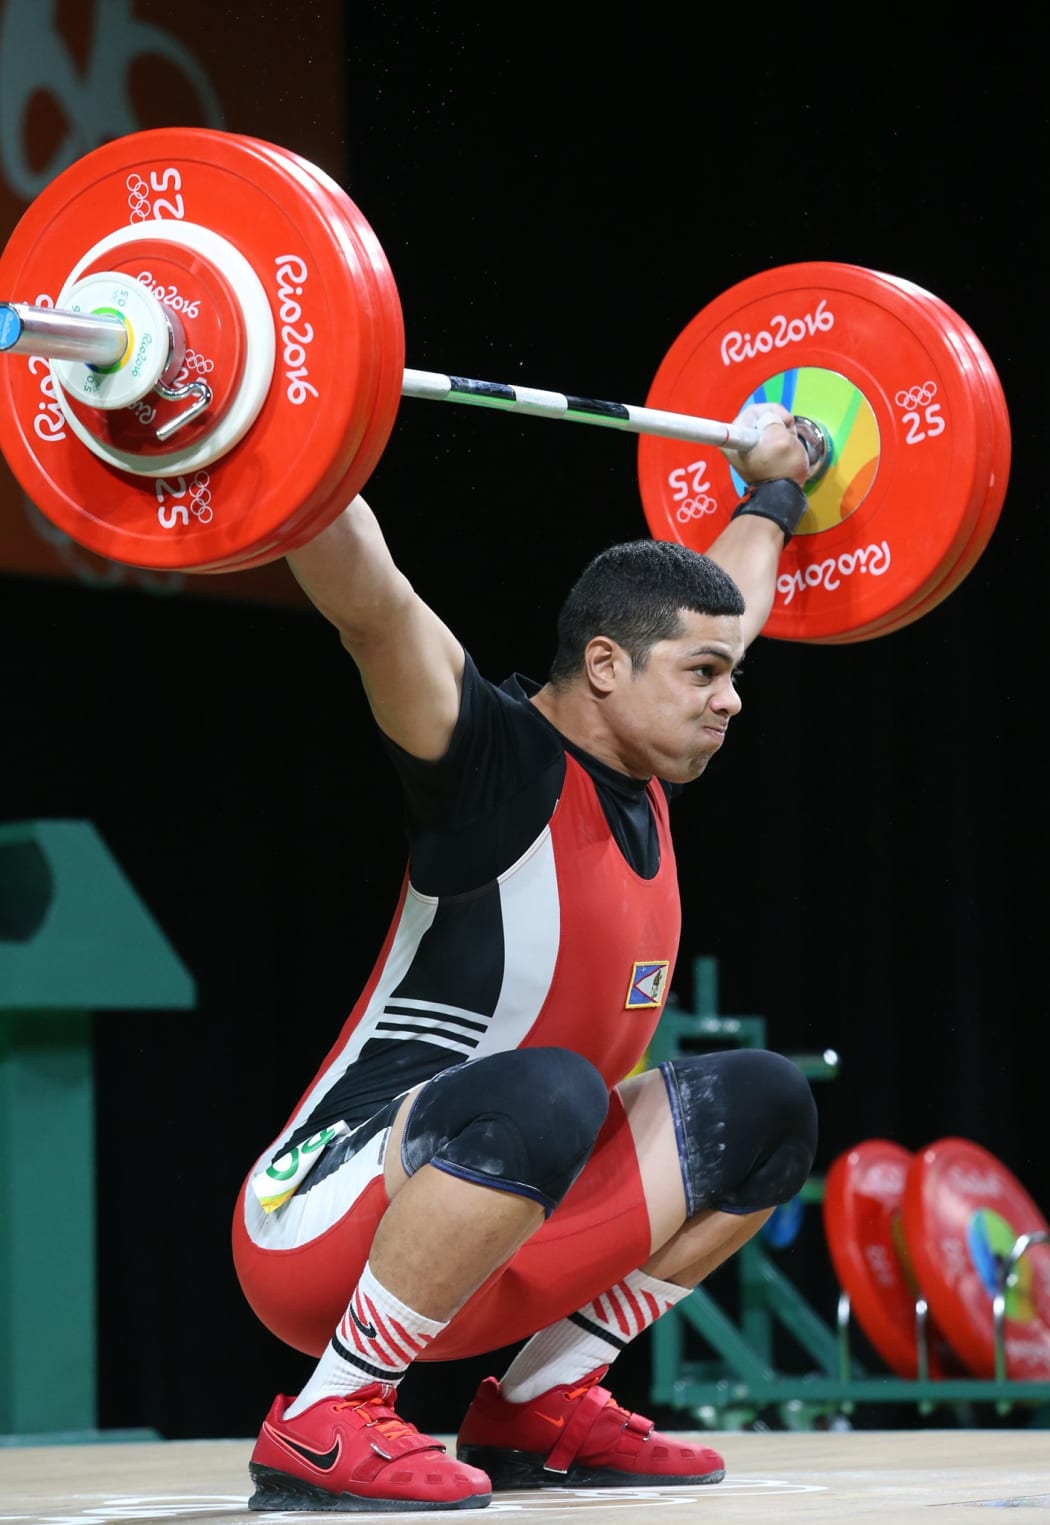 Tanumafili Malietoa Jungblut will compete in the 109kg weightlifting event for American Samoa.